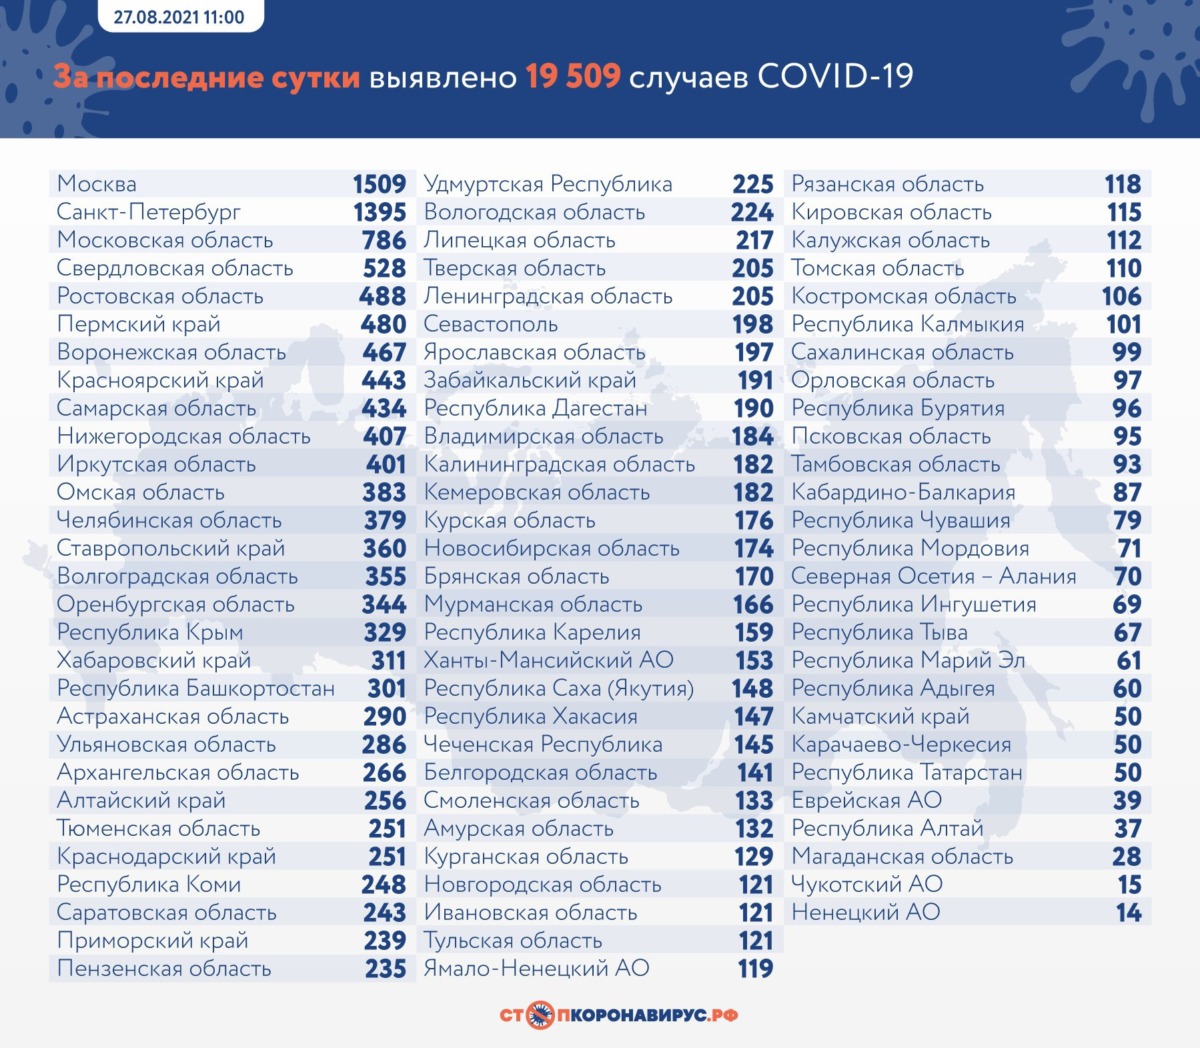 Статистика коронавируса в России на 27 августа